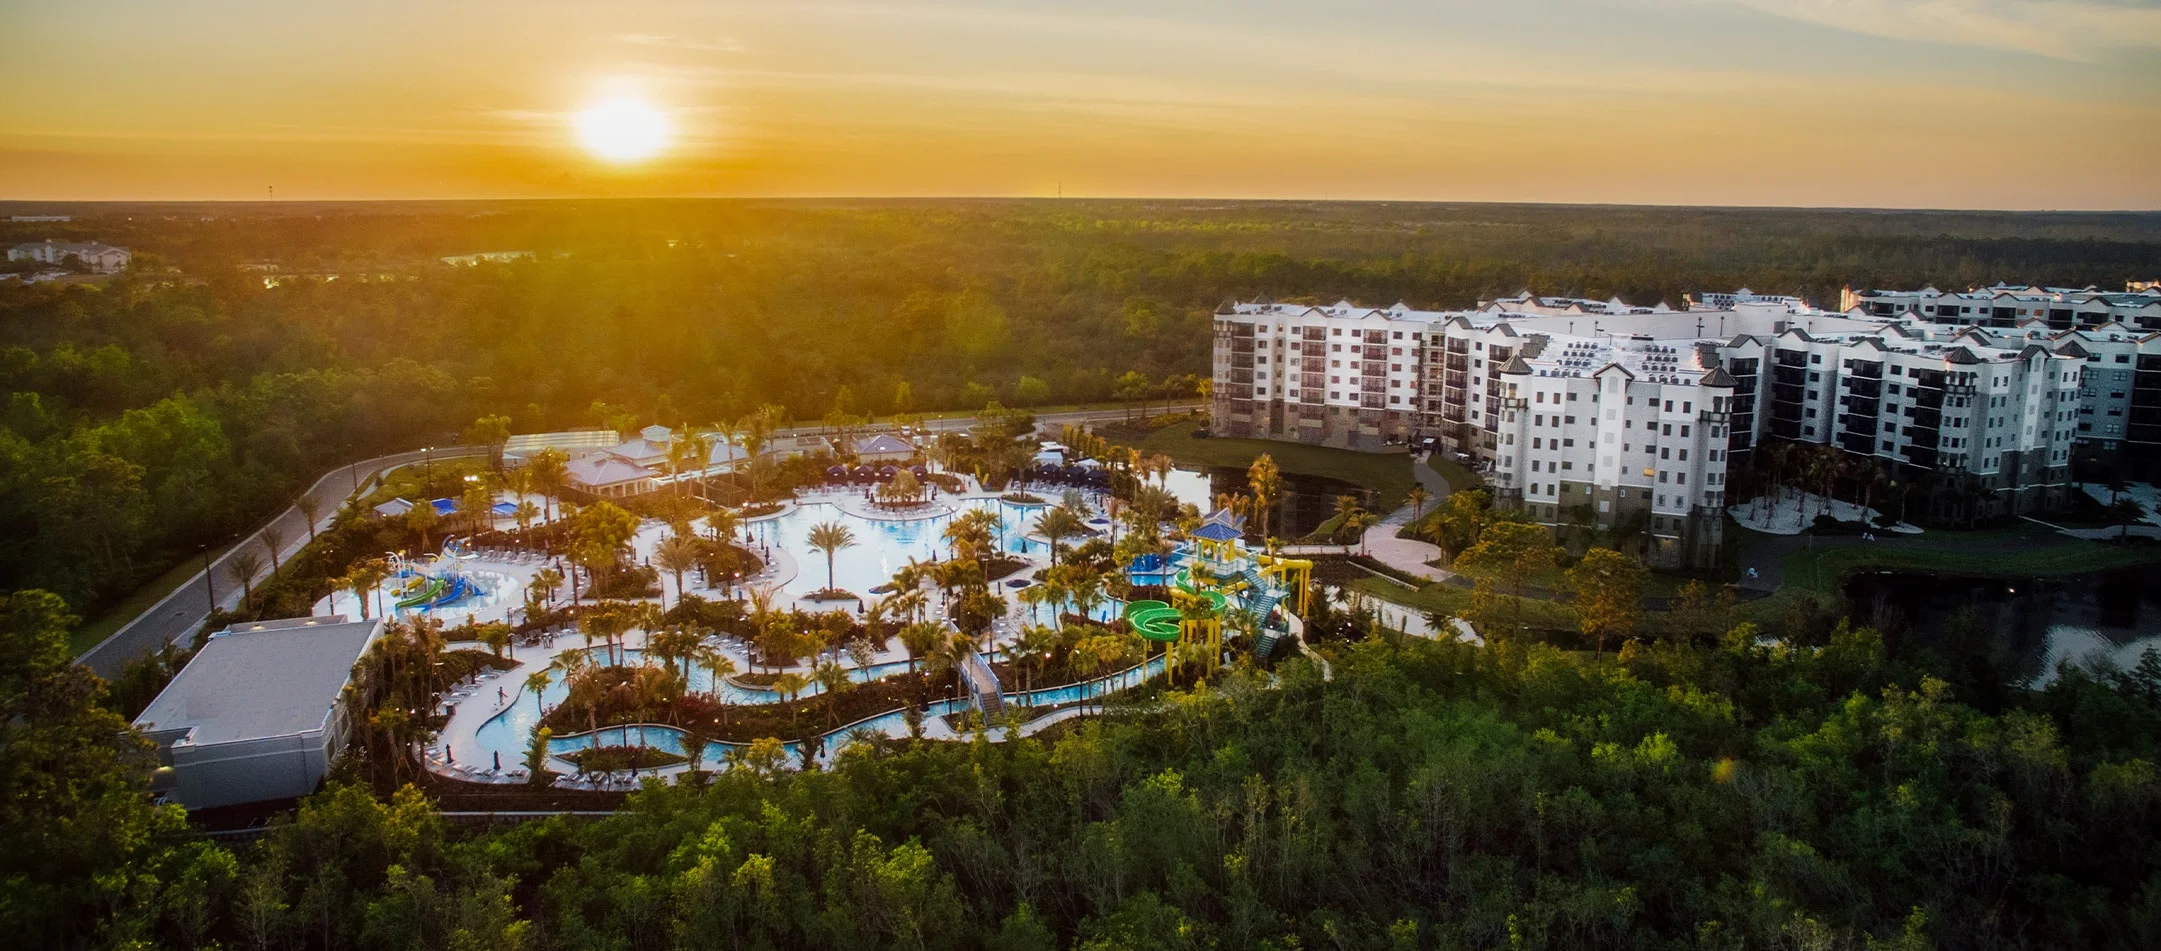 The Grove Resort & Water Park Orlando at dusk